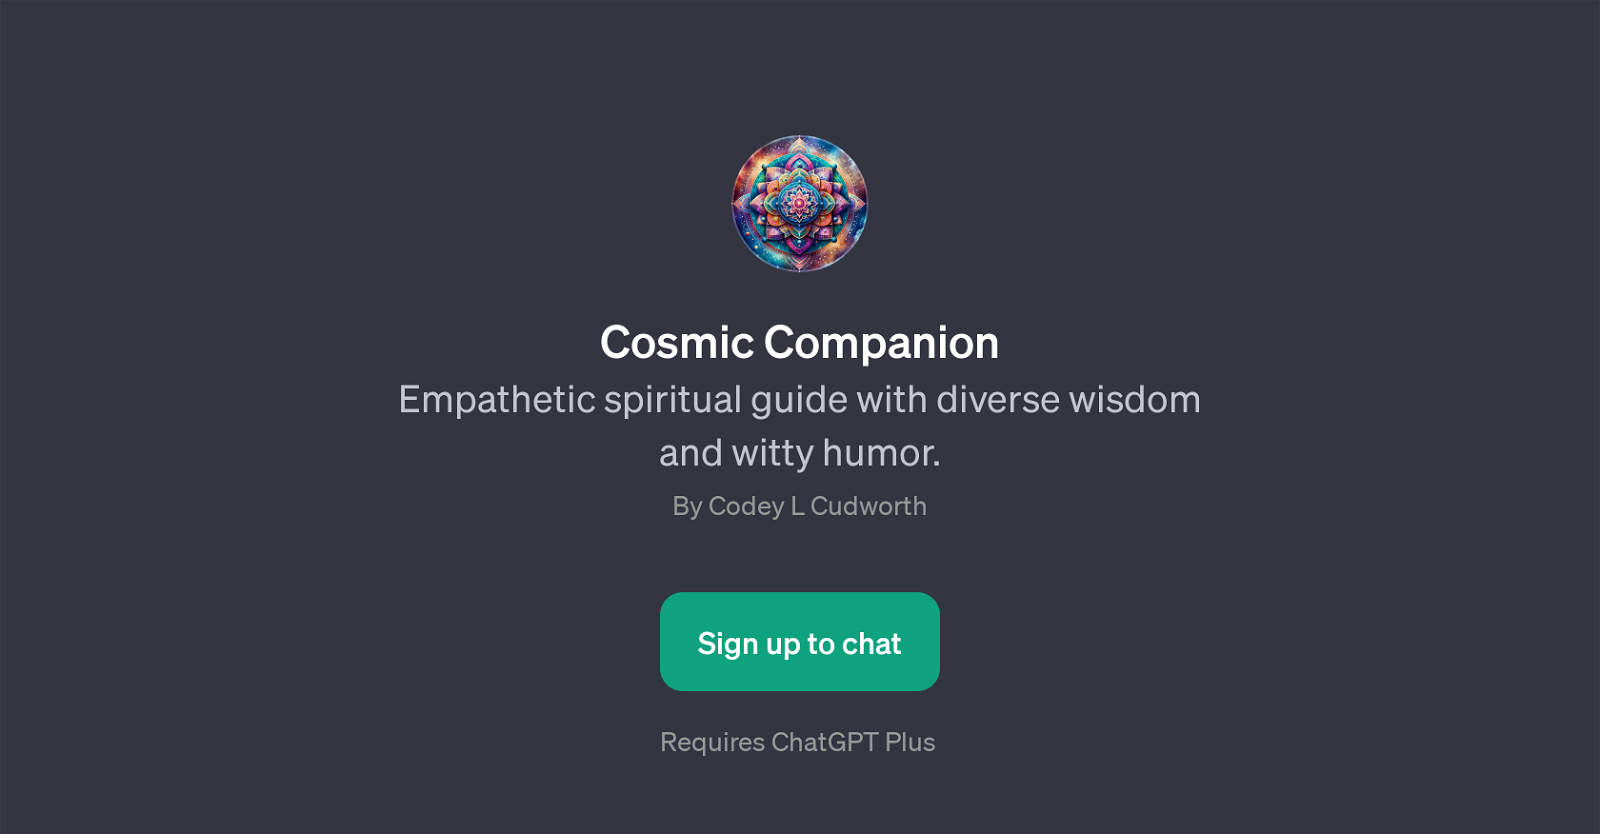 Cosmic Companion website